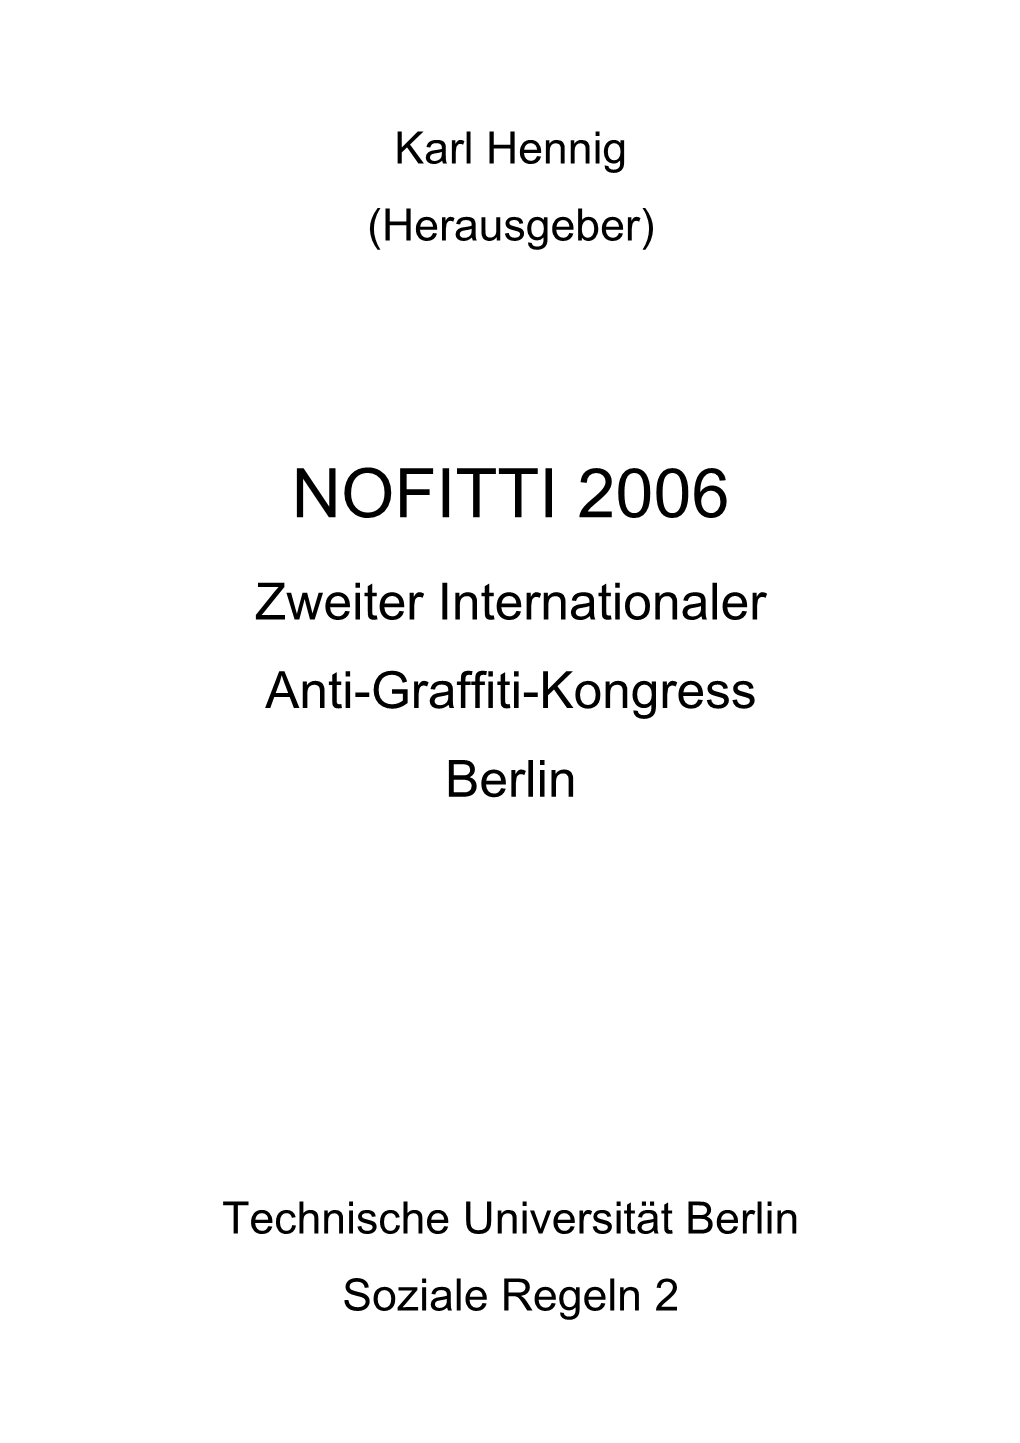 NOFITTI 2006 Zweiter Internationaler Anti-Graffiti-Kongress Berlin